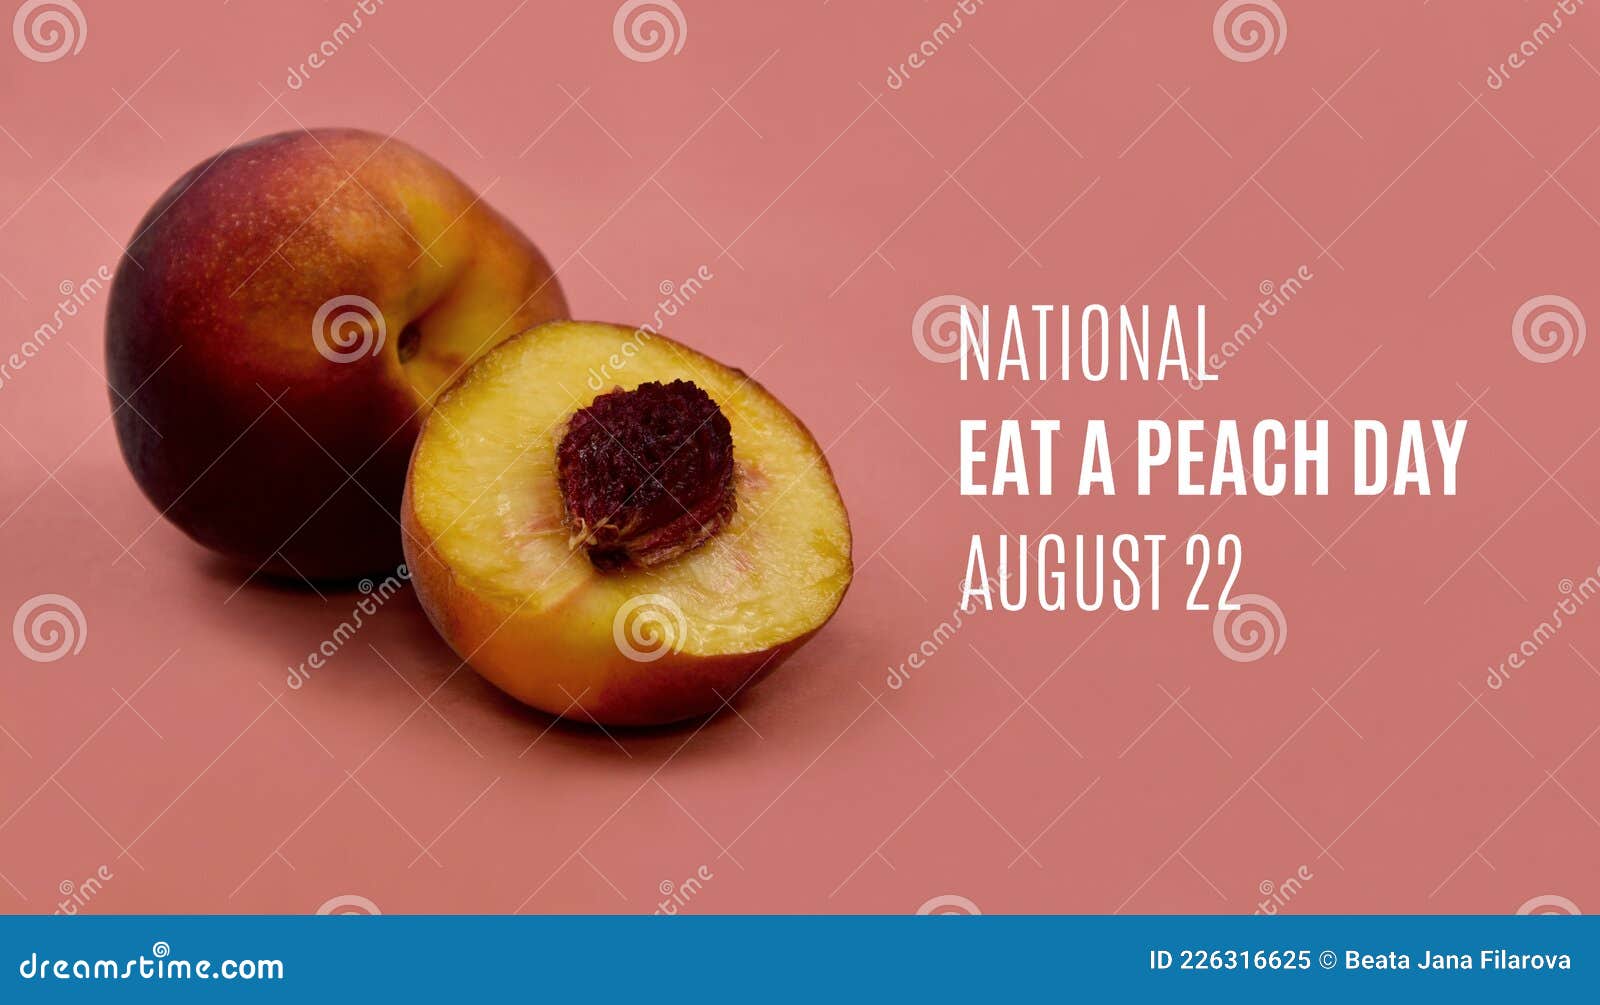 national-eat-peach-day-226316625.jpg